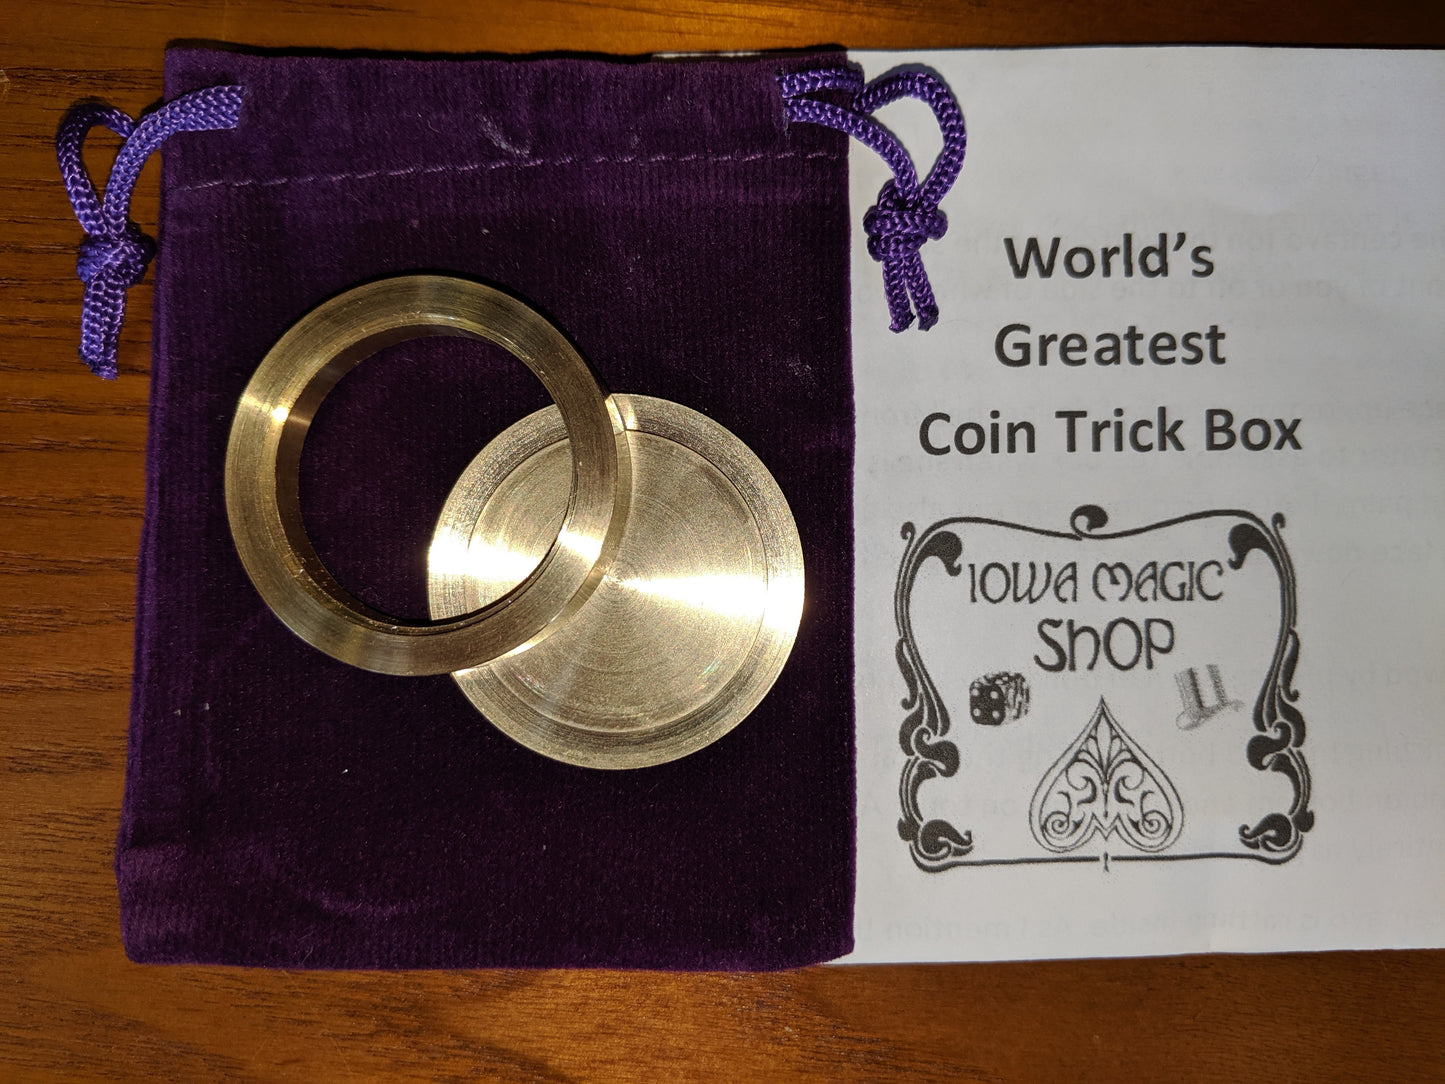 The World's Greatest Coin Trick Box w/ Alchemy Philosopher Stone Symbol Engraving by Iowa Magic Shop